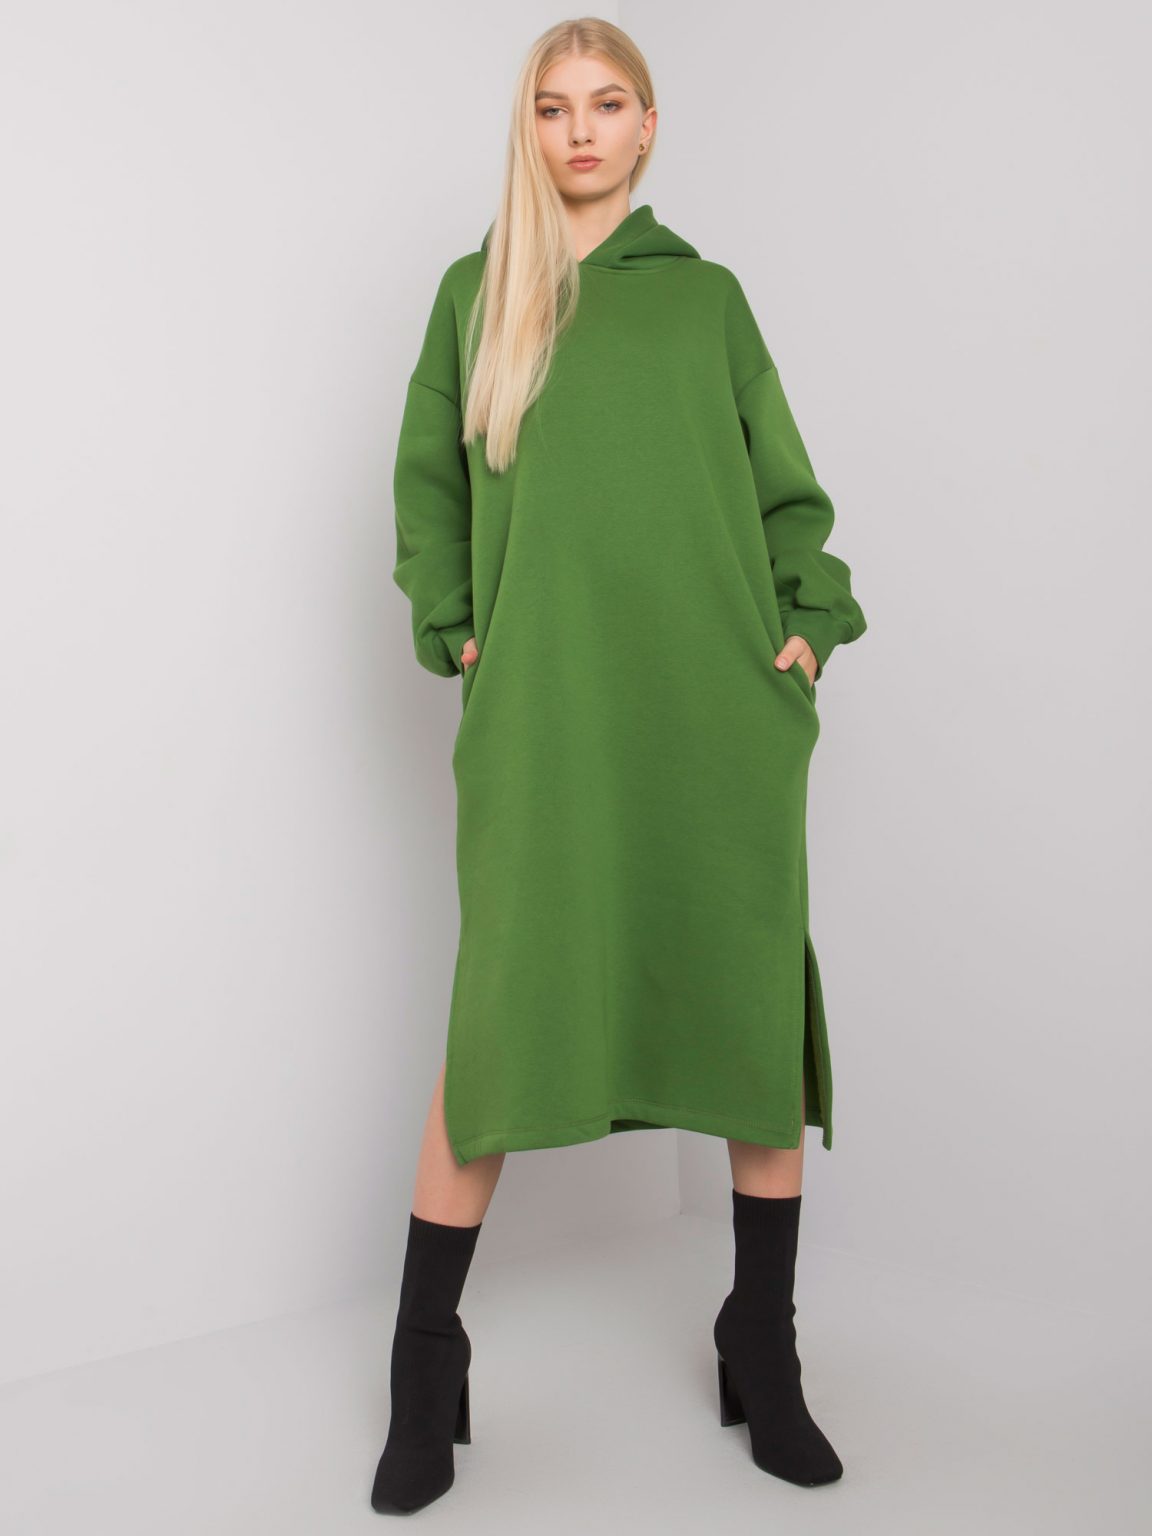 Zielona sukienka dresowa z kapturem Christel